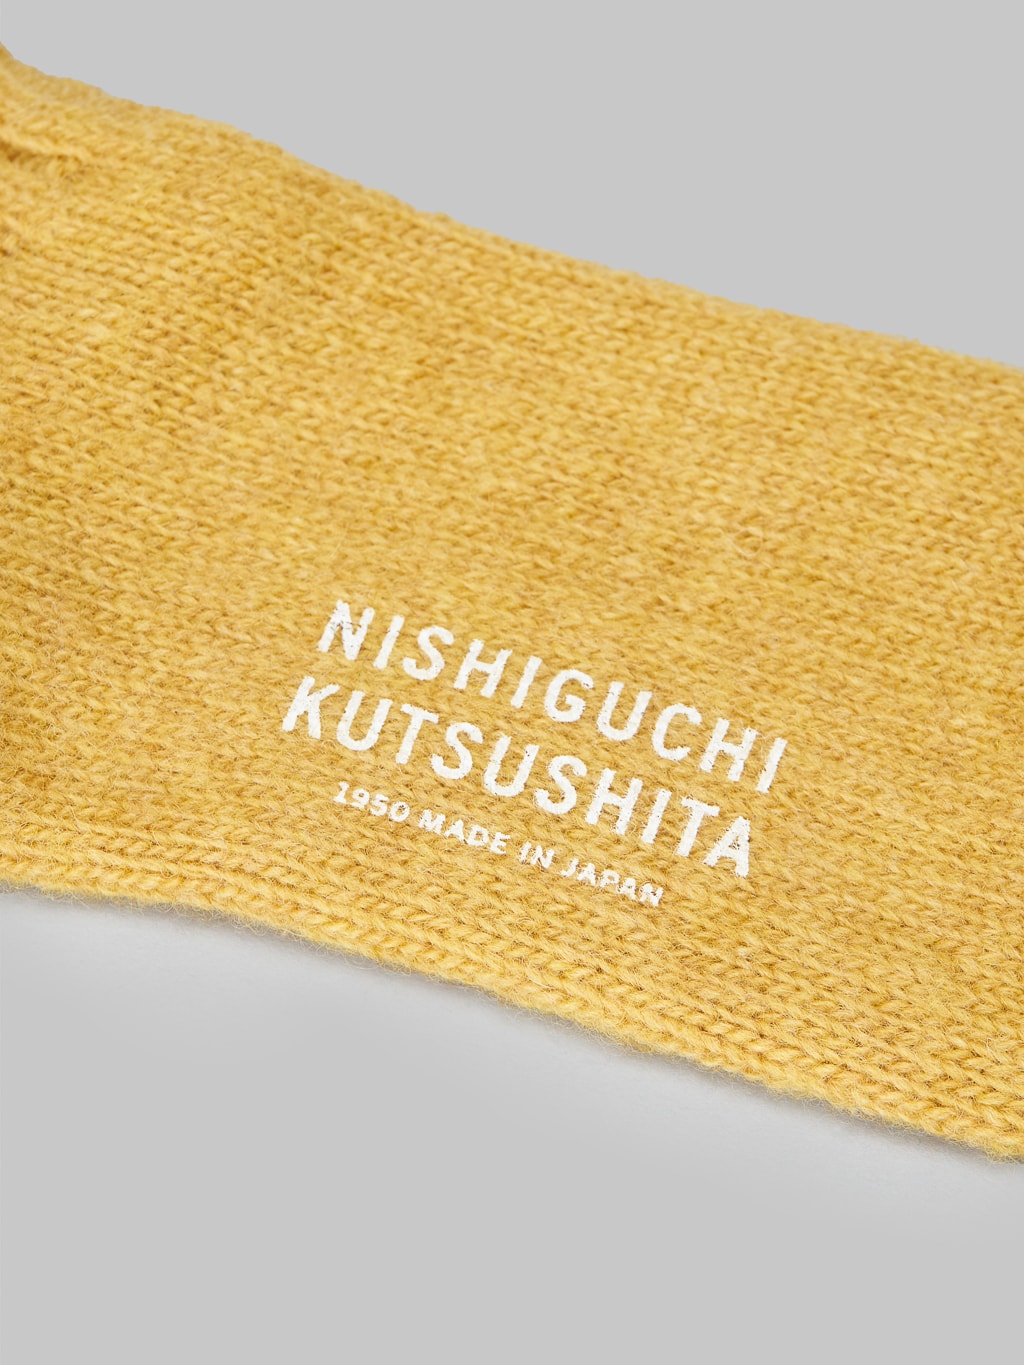 nishiguchi kutsushita wool ribbed socks apple soda brand logo stamped